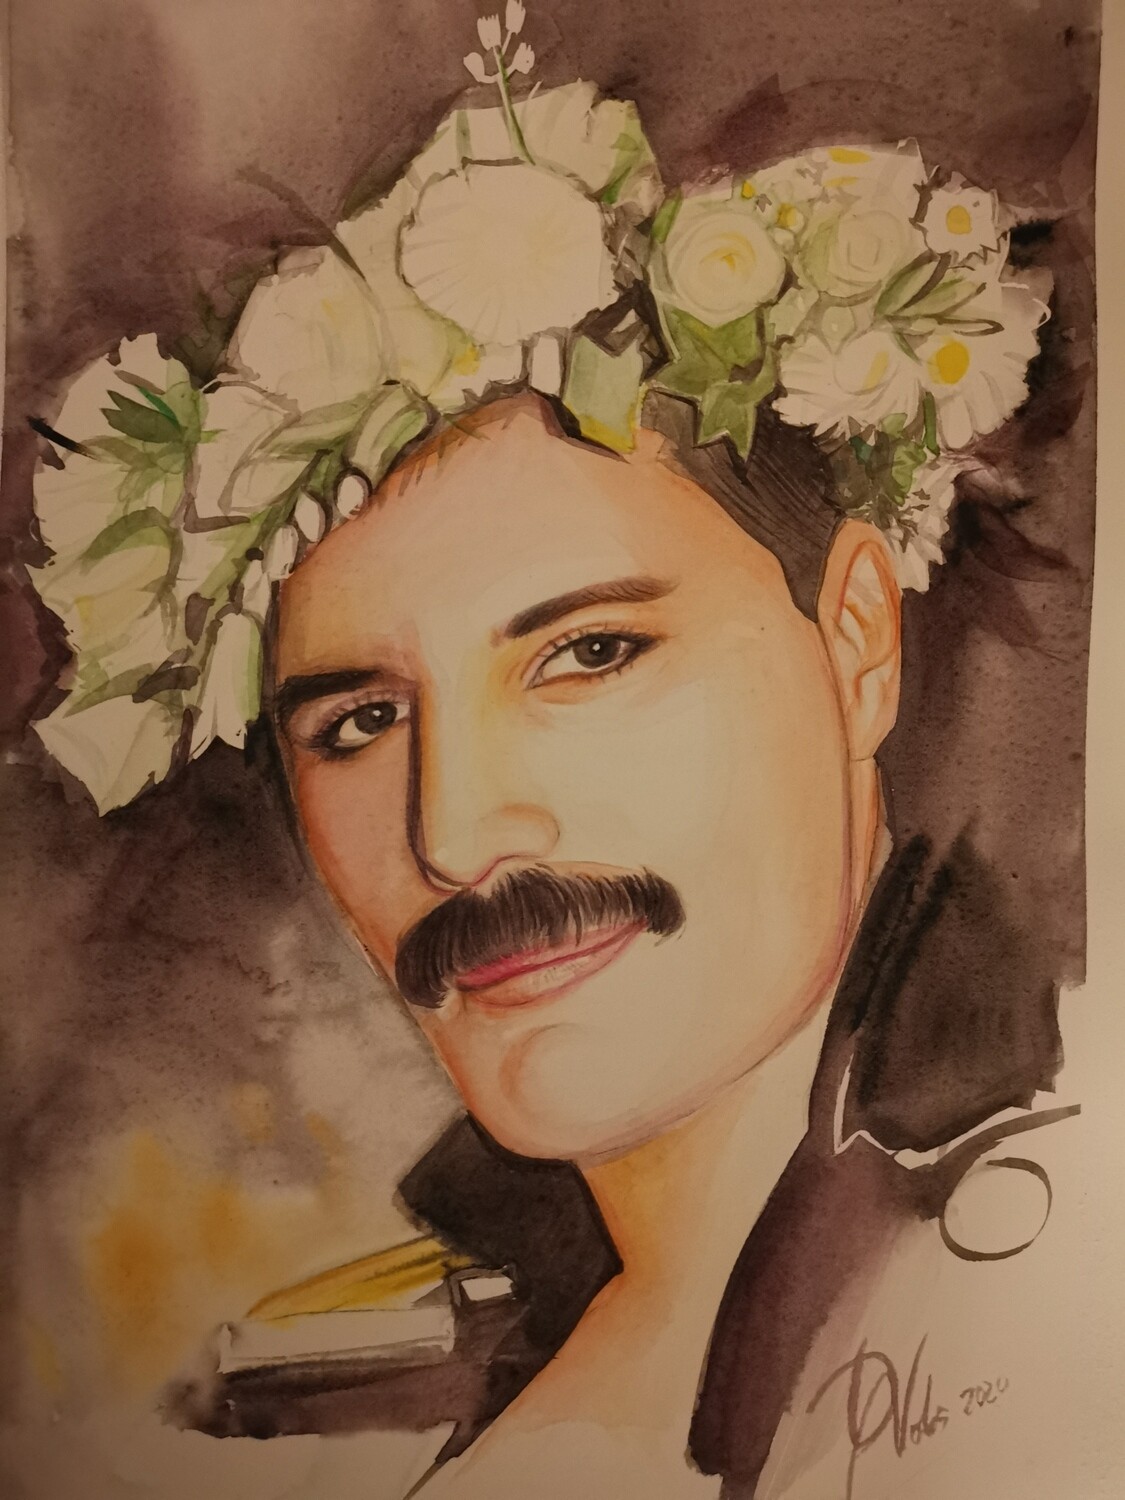 The portrait of Freddie Mercury/Limited edition